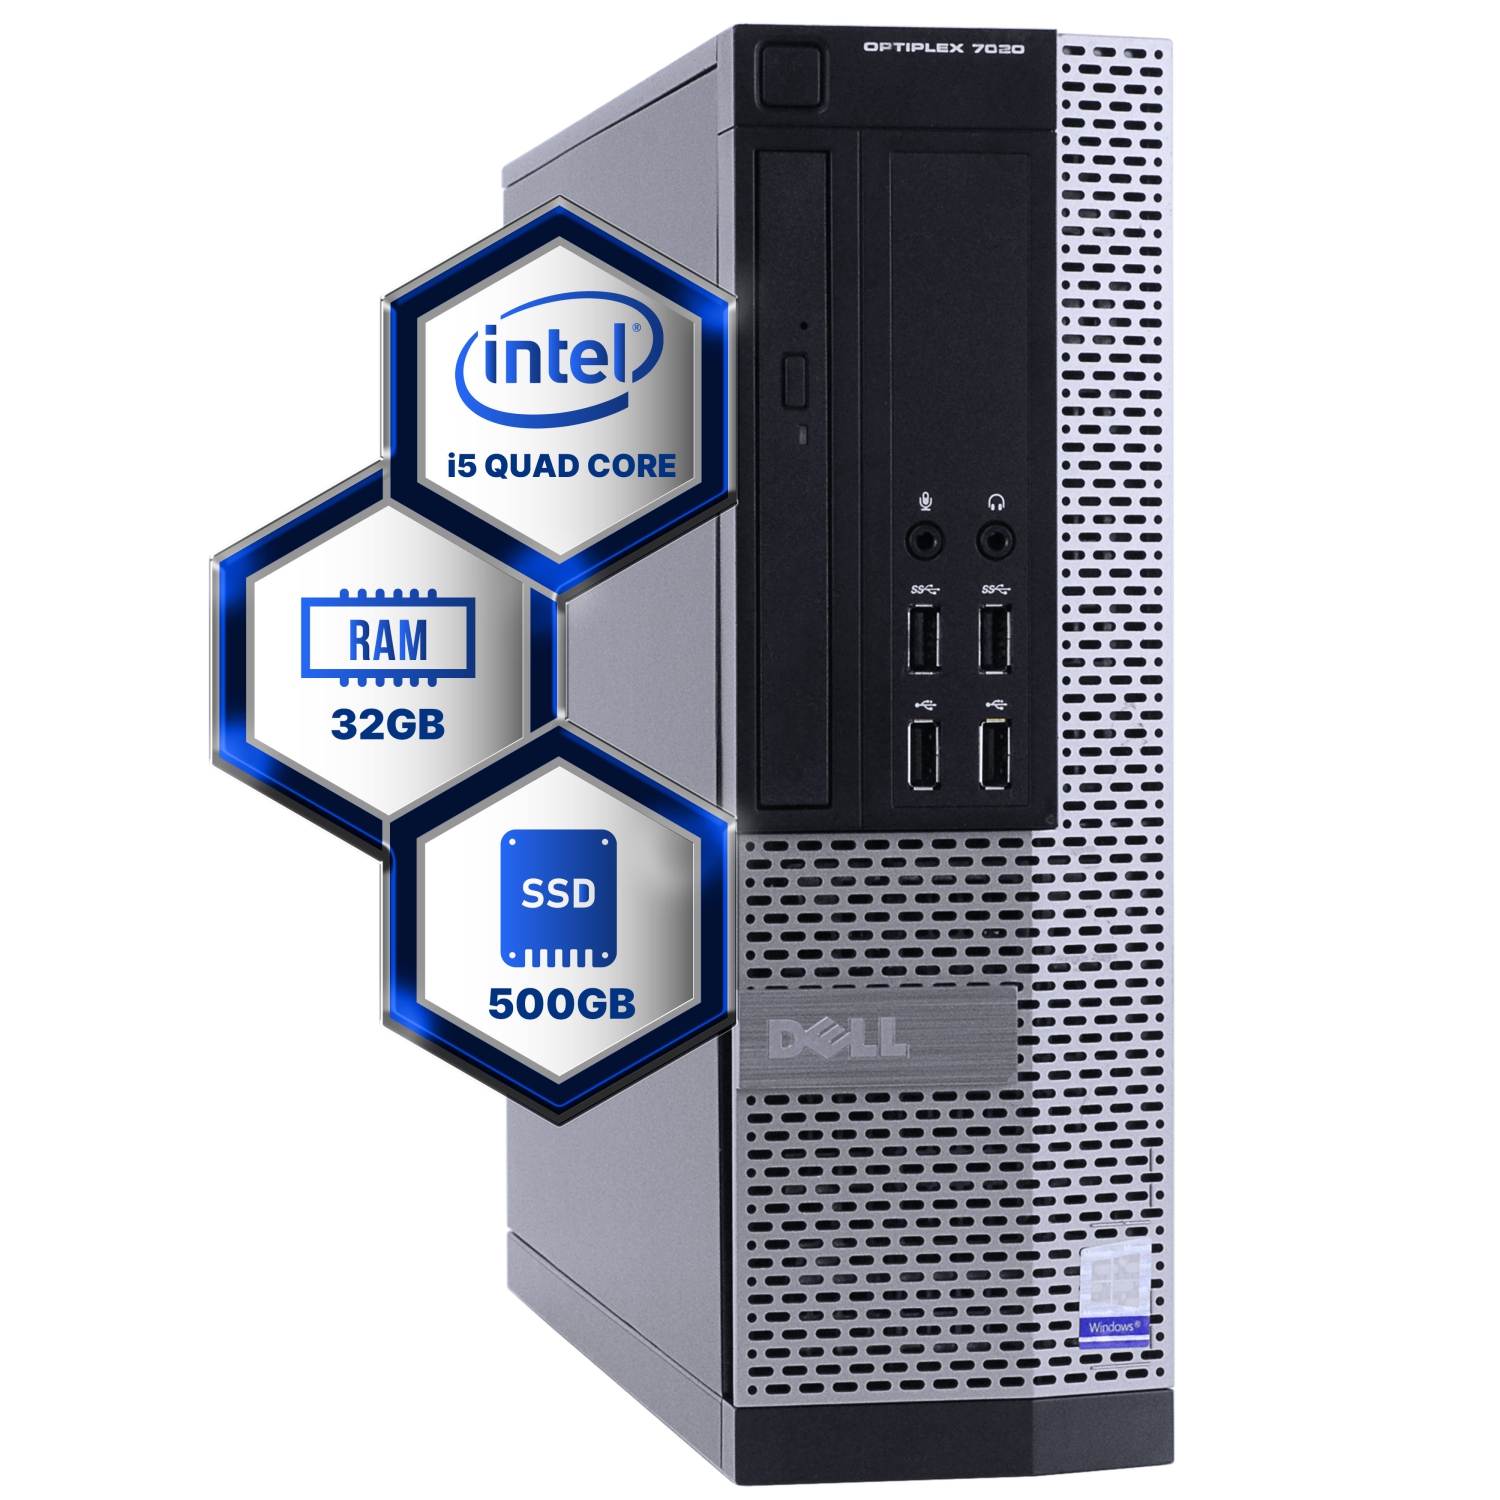 Refurbished (Good) - Dell Optiplex 4th Gen Desktop Computer | Quad Core Intel i5 (3.2) | 32GB DDR3 RAM | 500GB SSD | Windows 10 Professional | Home or Office PC